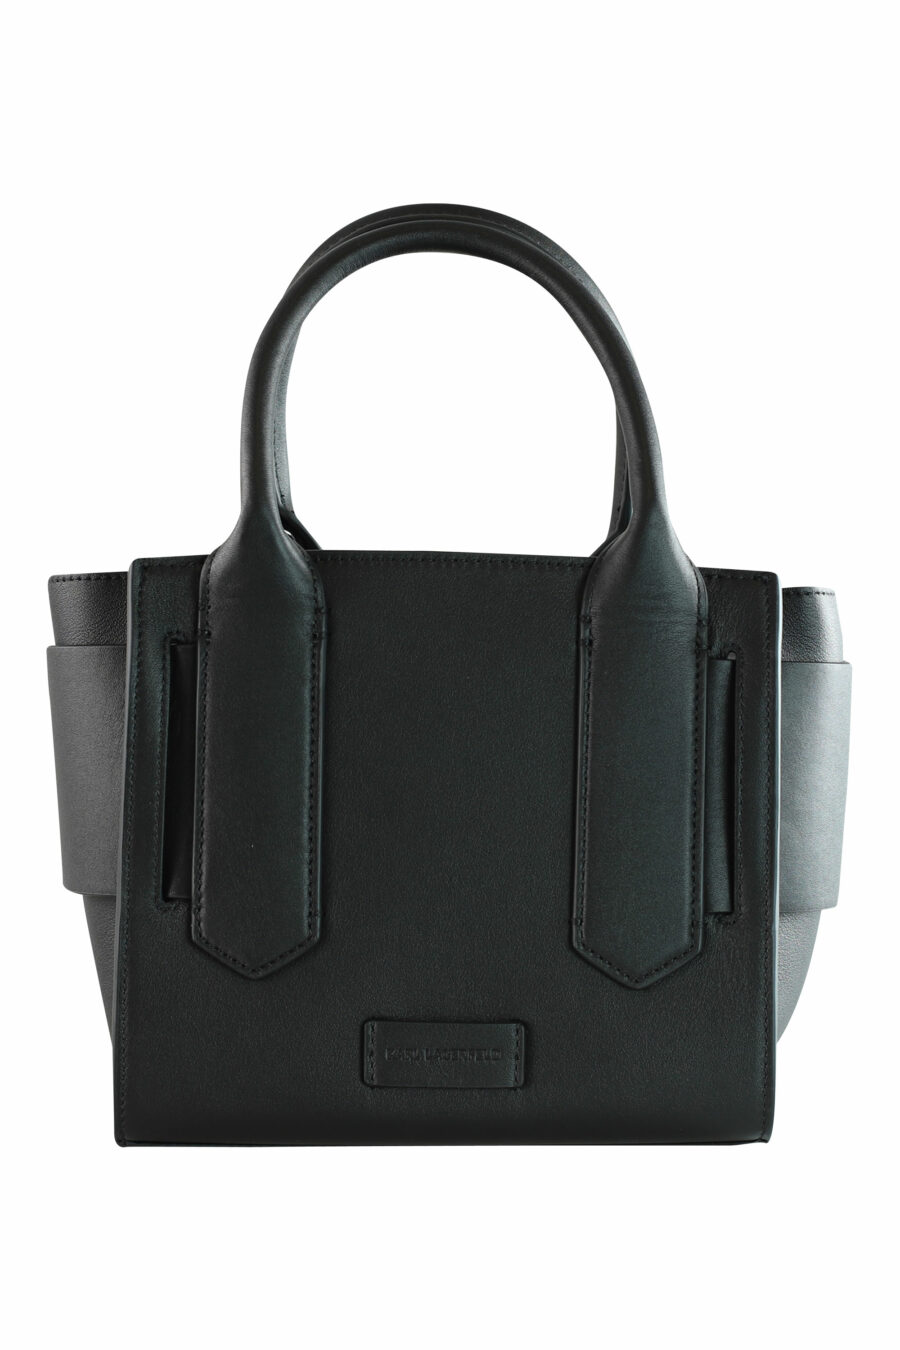 Tote bag mini negro con logo "k/disk" - 8720744103363 3